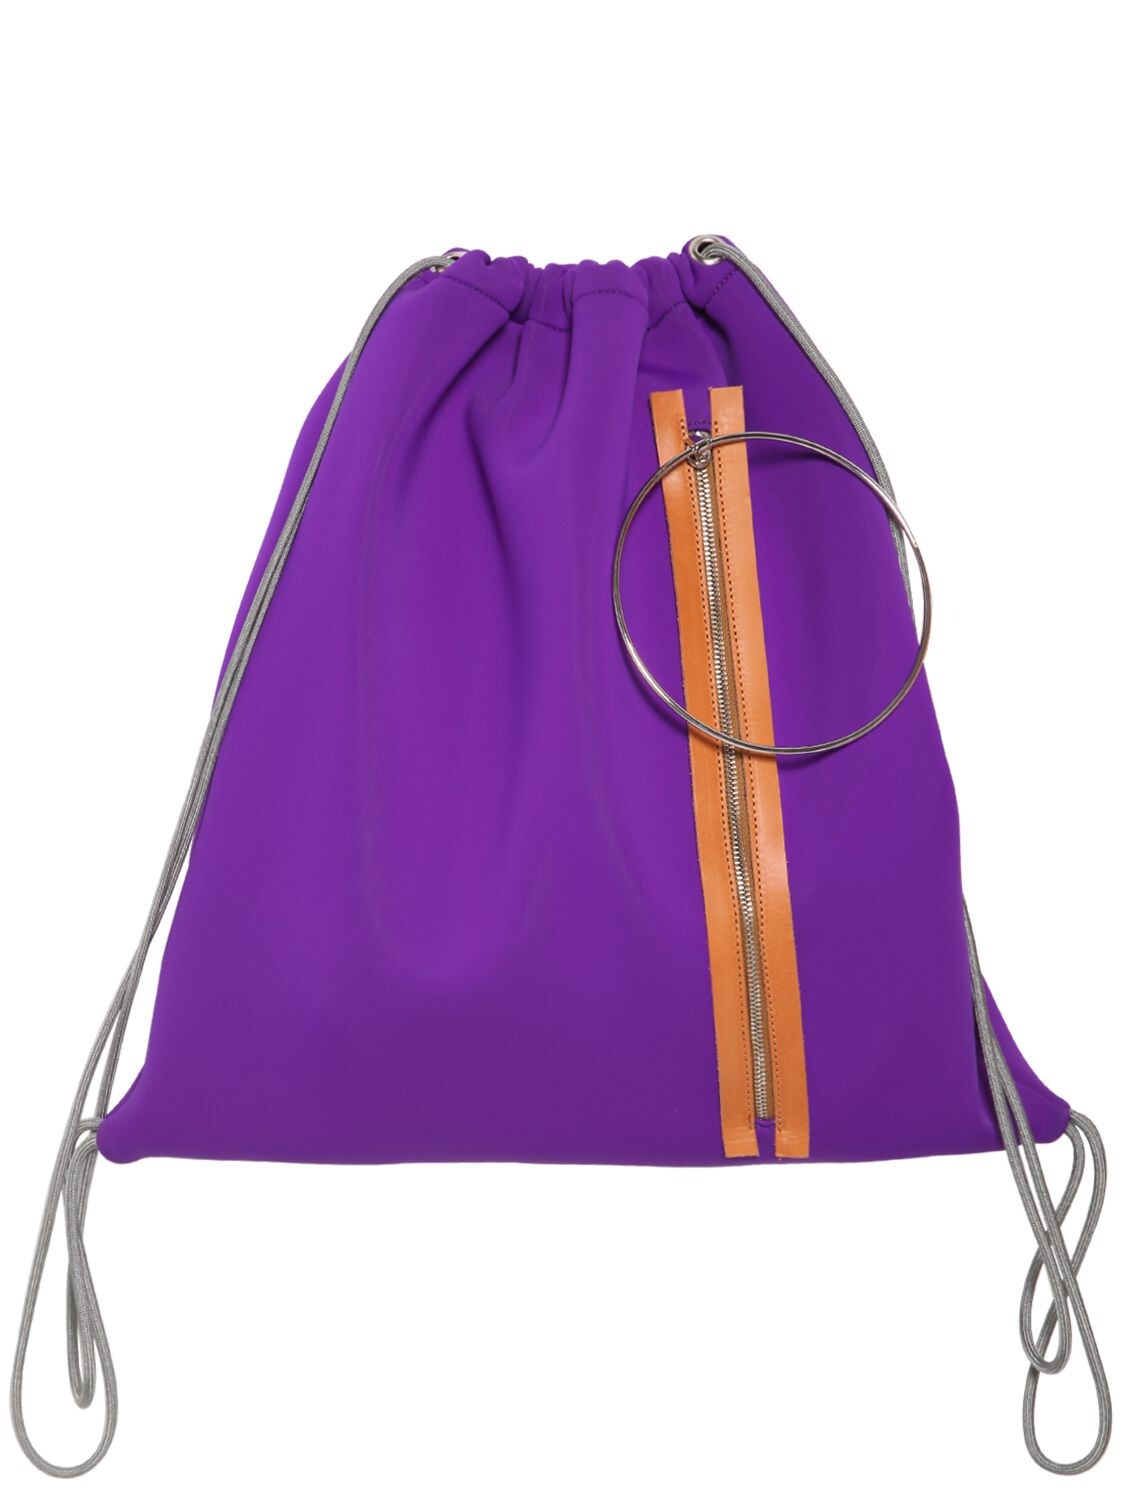 Mm6 Maison Margiela Zip & Hoop Neoprene Drawstring Backpack In Purple